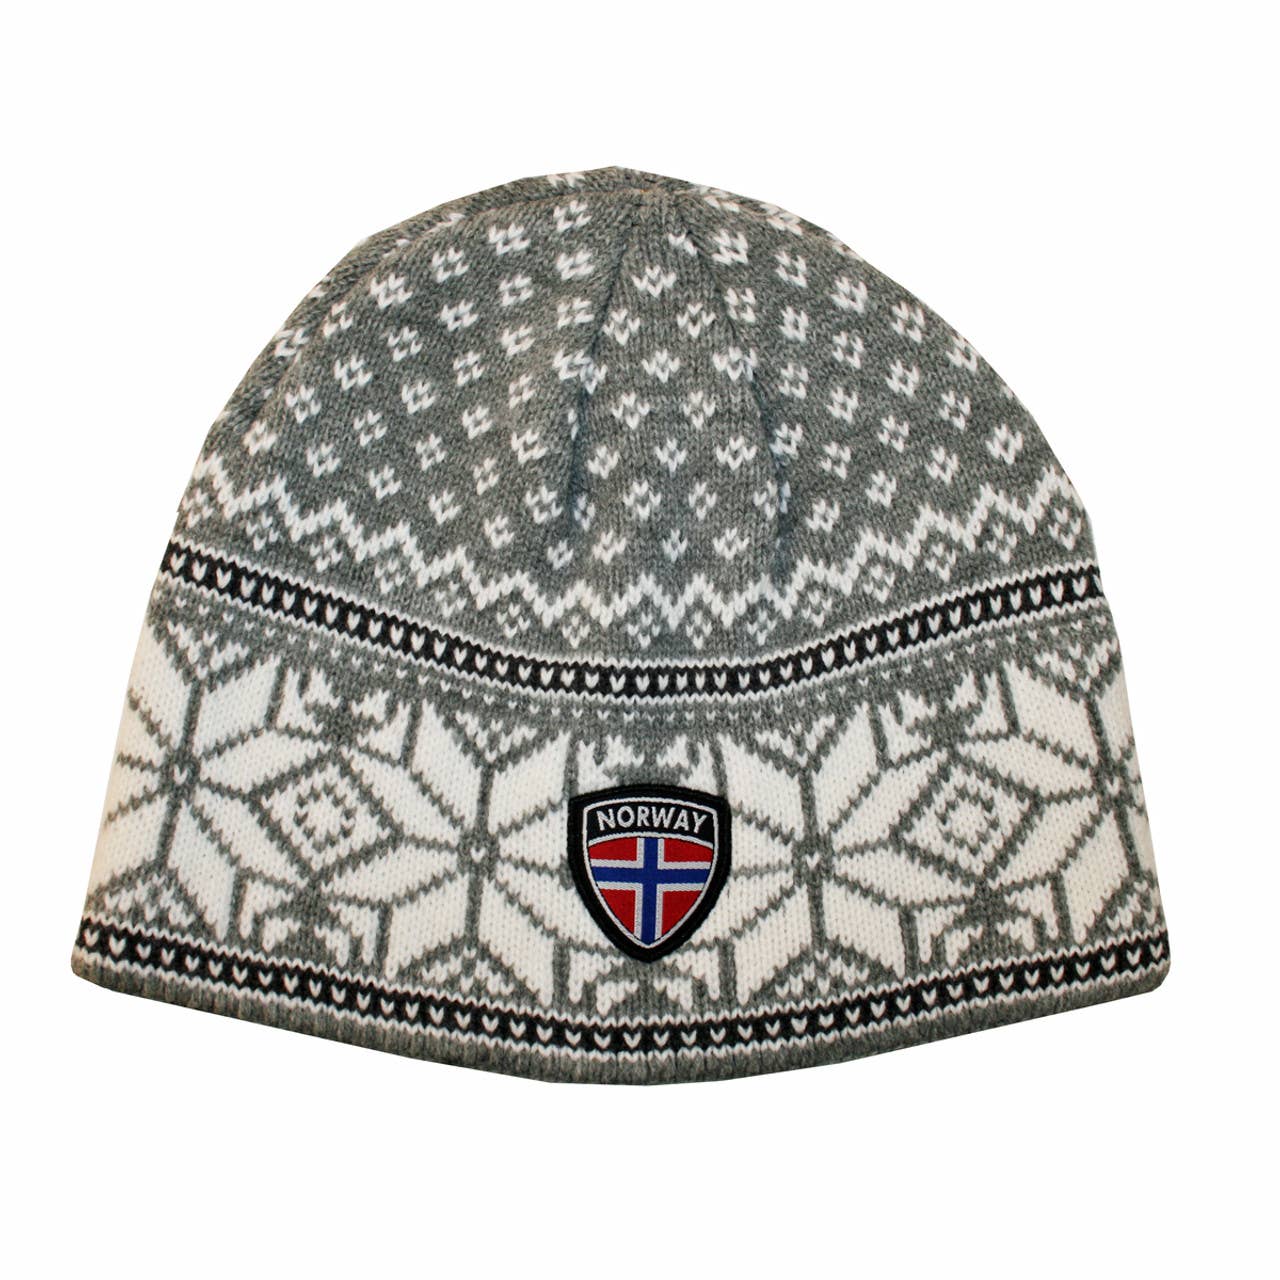 Hat: Norway Flag - Knit Hat - Grey - White Stars - Unisex Size